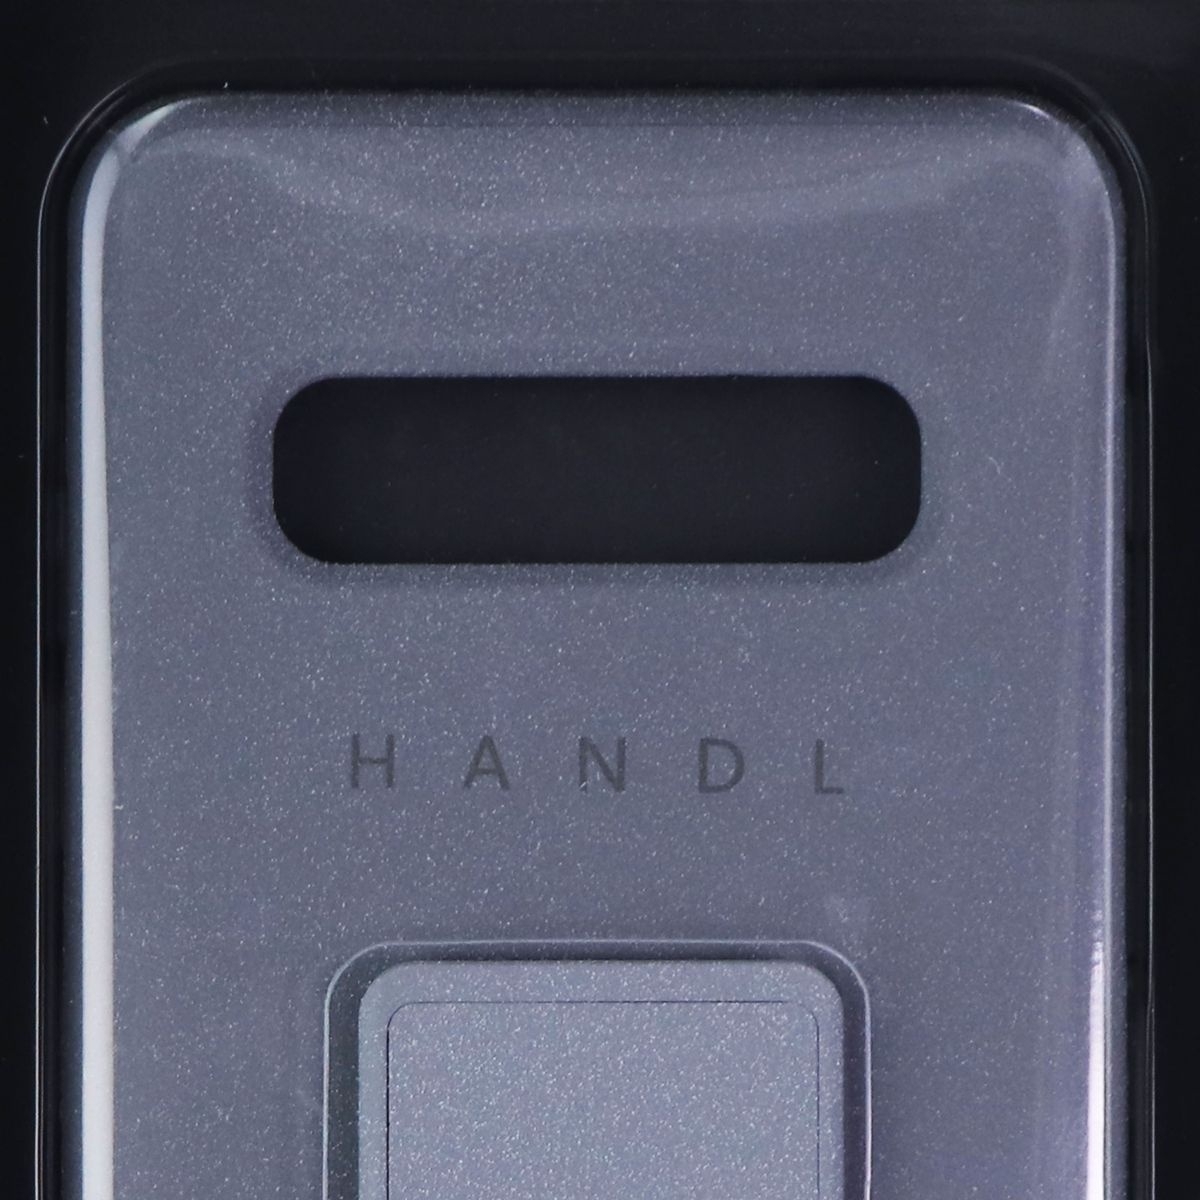 HANDL Textured Spray Case With Clip/Kickstand For Samsung Galaxy S10 - Gray